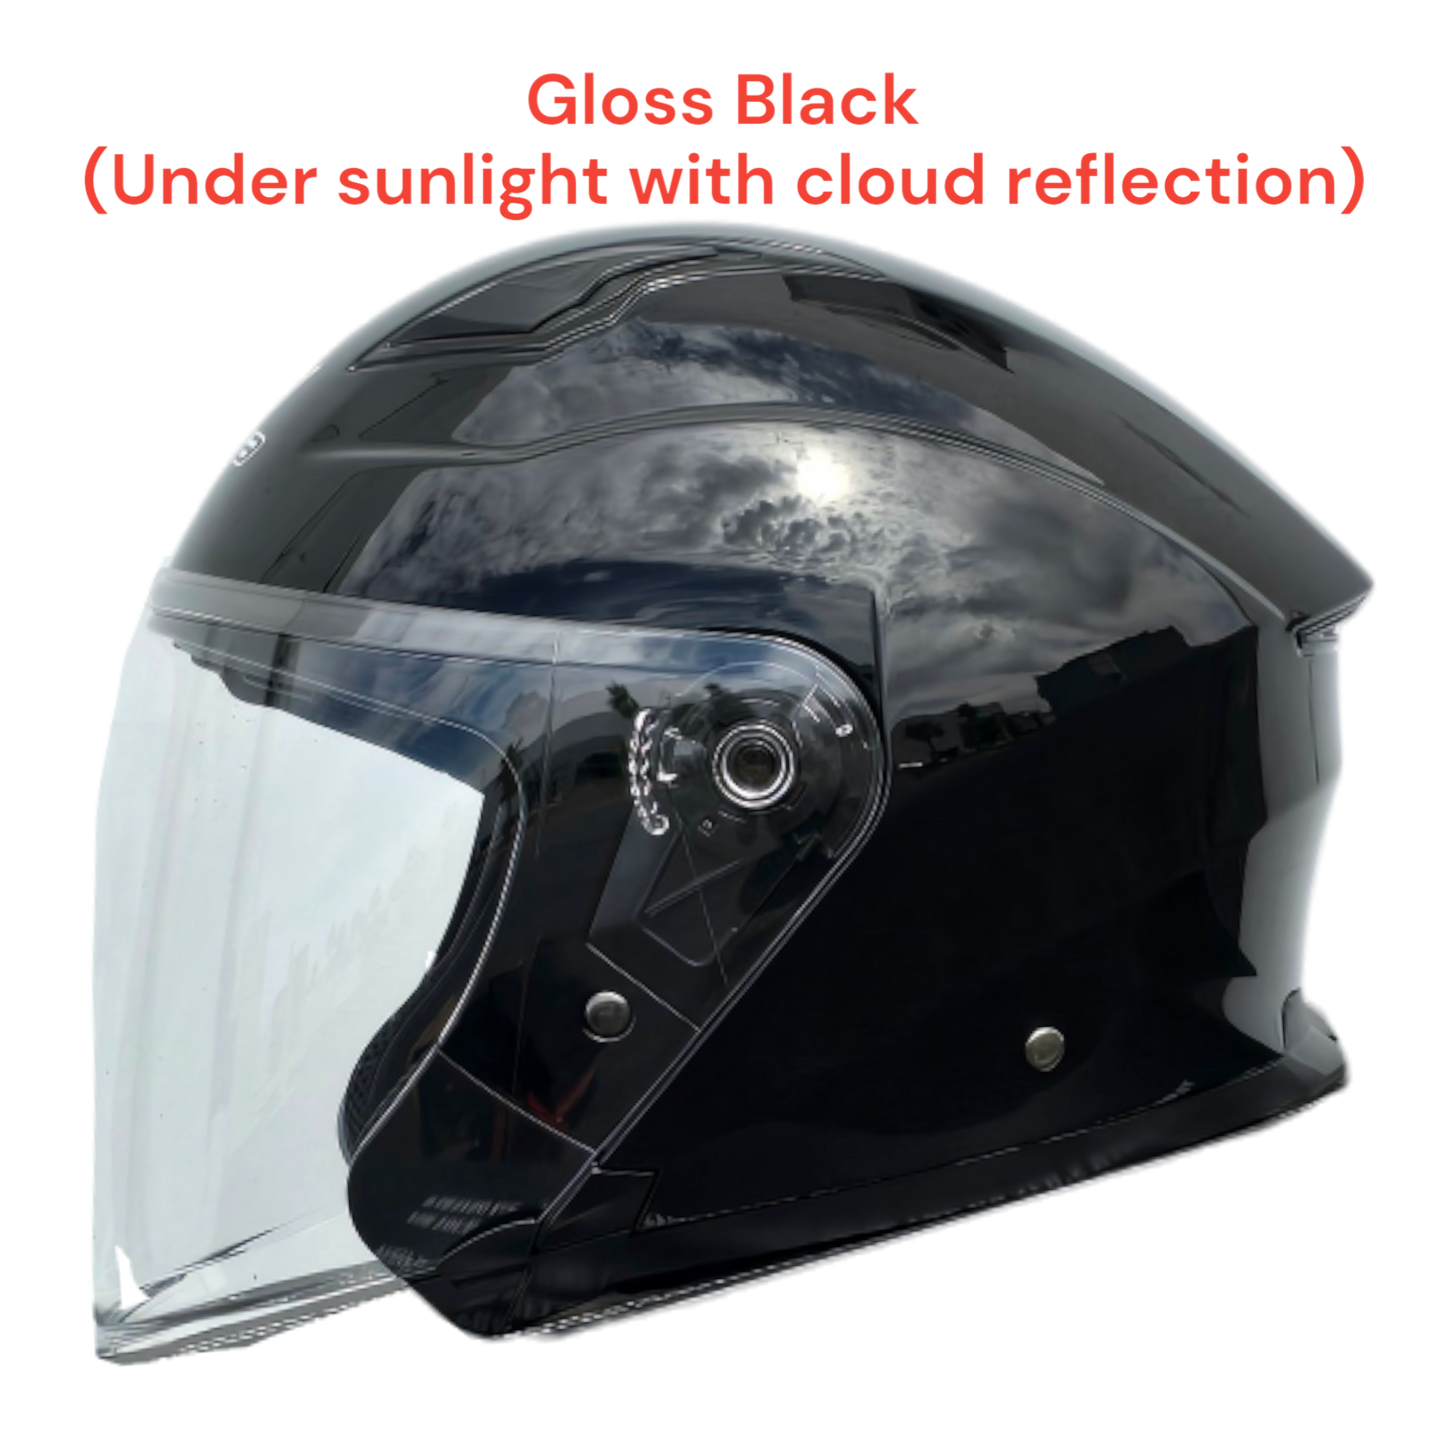 The Largest Open Face Helmet on the market! Vega Superdome Open Face Helmet